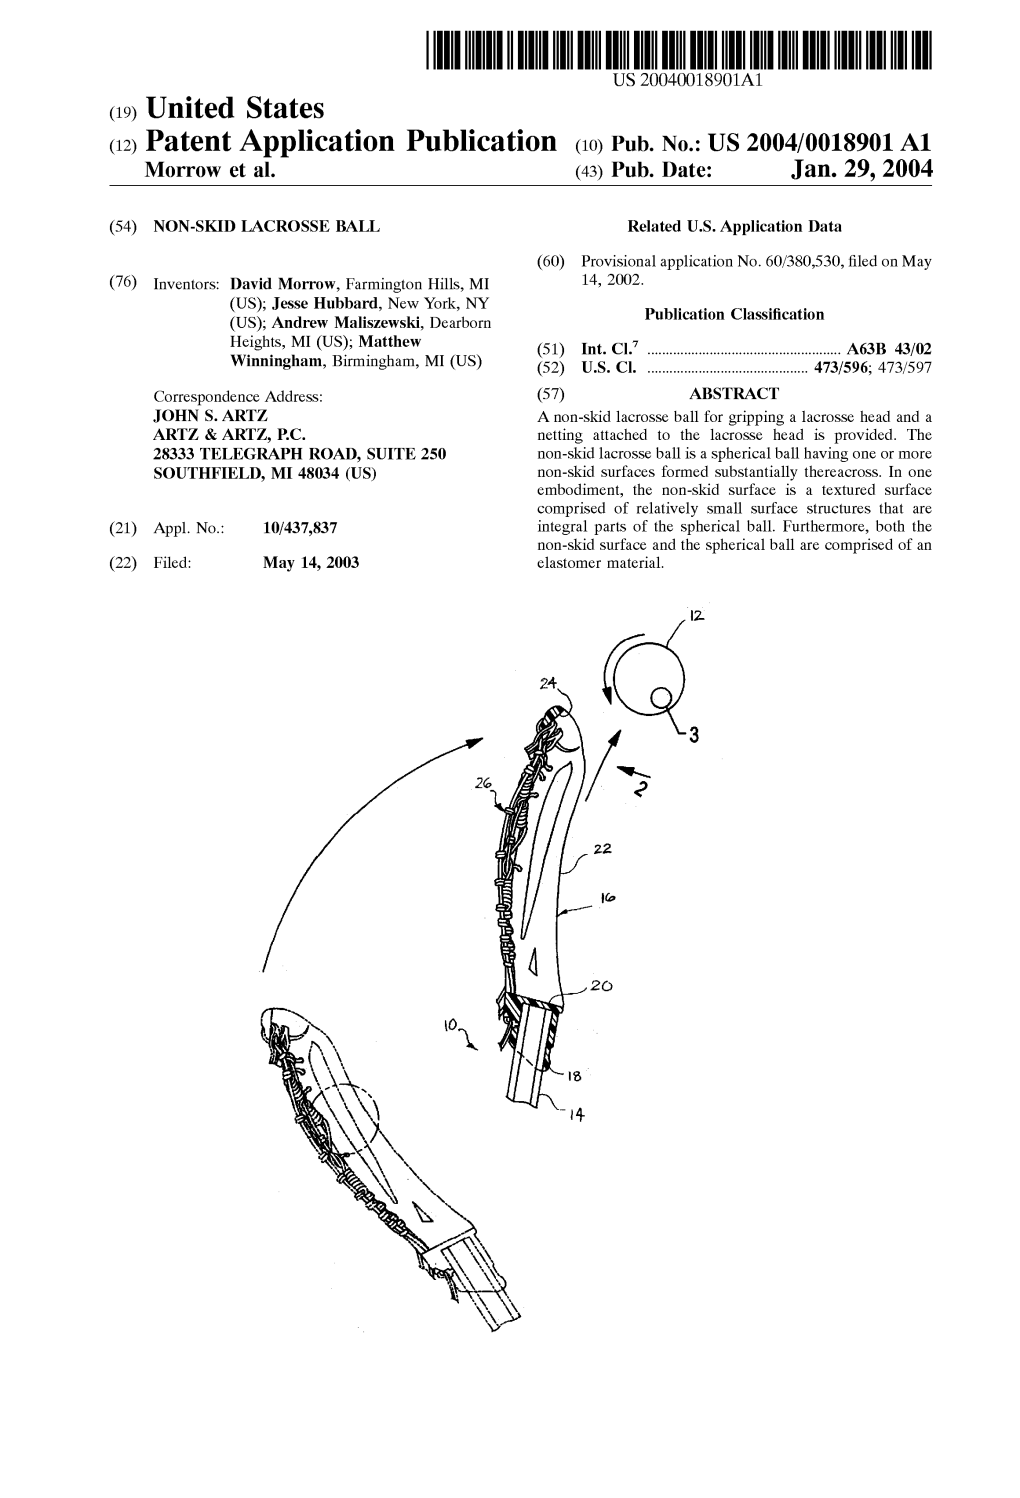 (12) Patent Application Publication (10) Pub. No.: US 2004/0018901 A1 Morrow Et Al